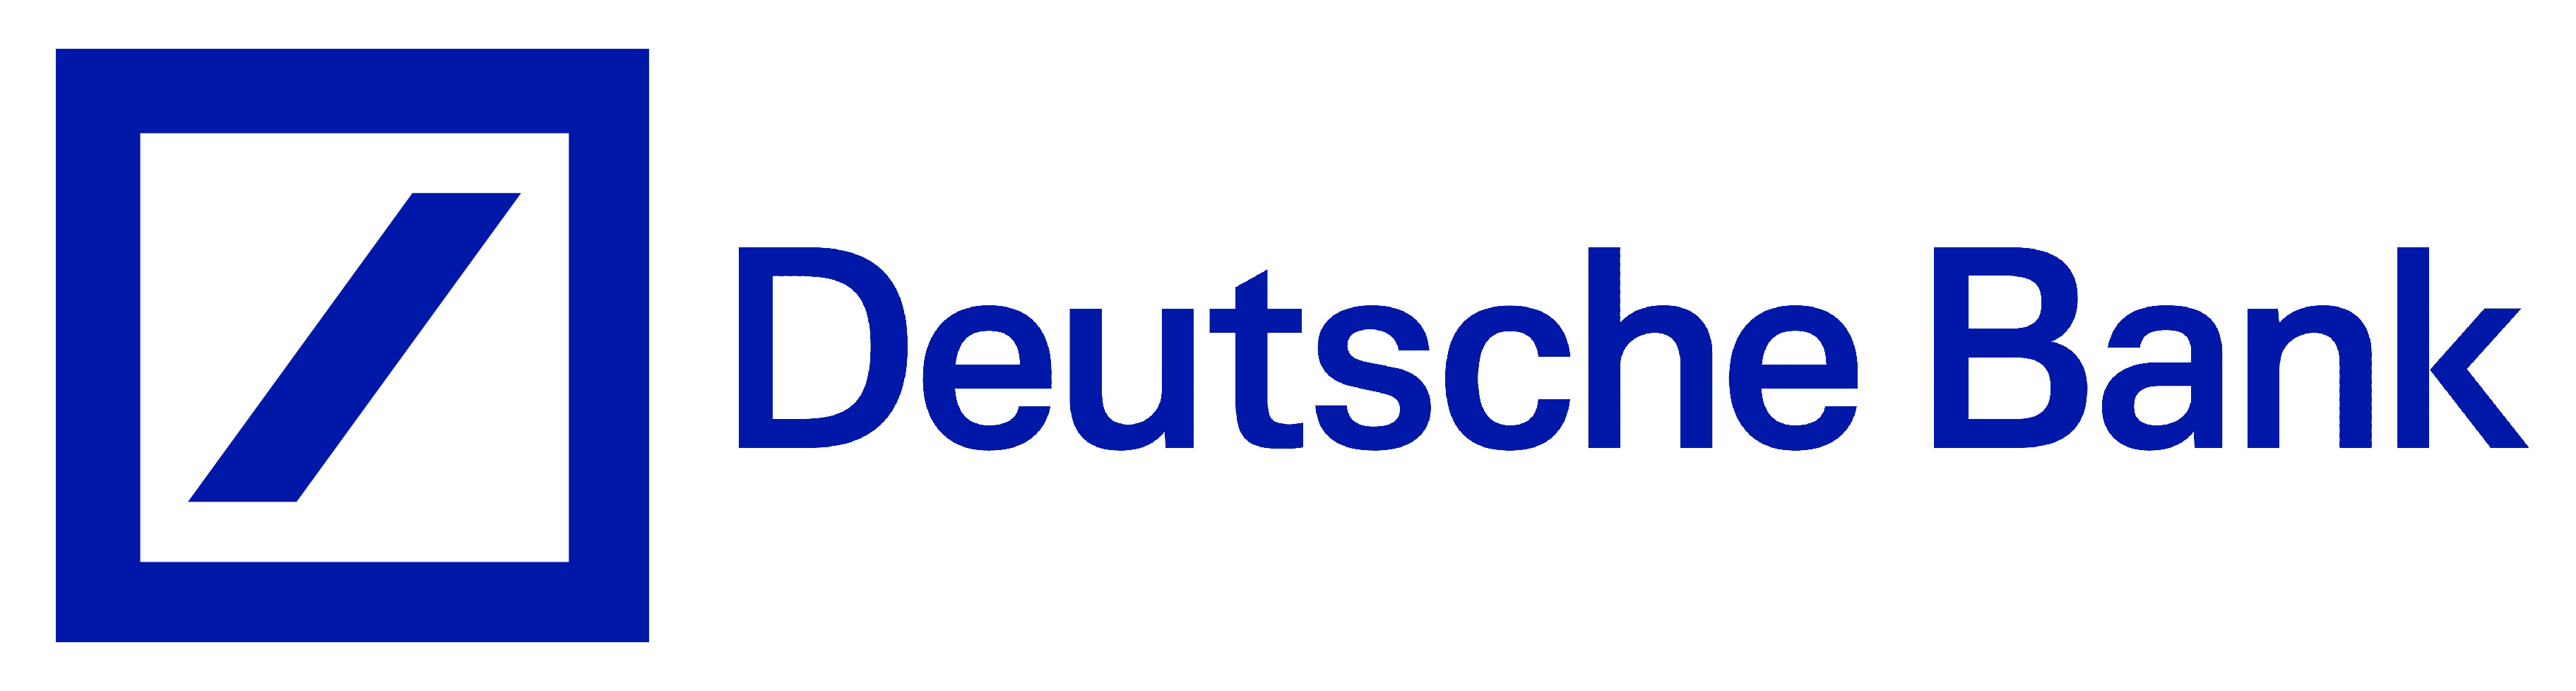 Deutsche bank letterhead